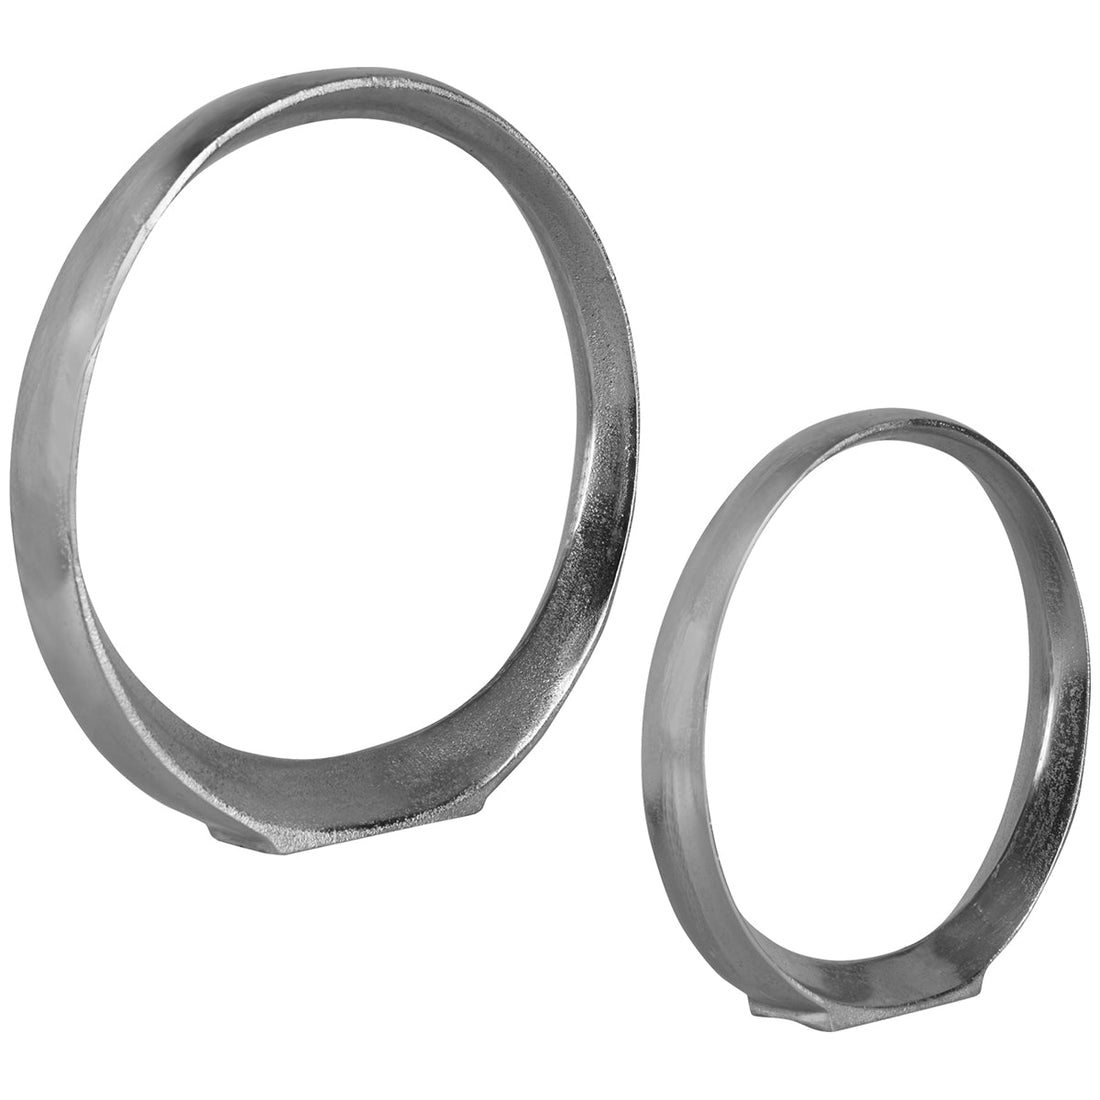 Uttermost Orbits Nickel Ring Sculptures, 2-Piece Set